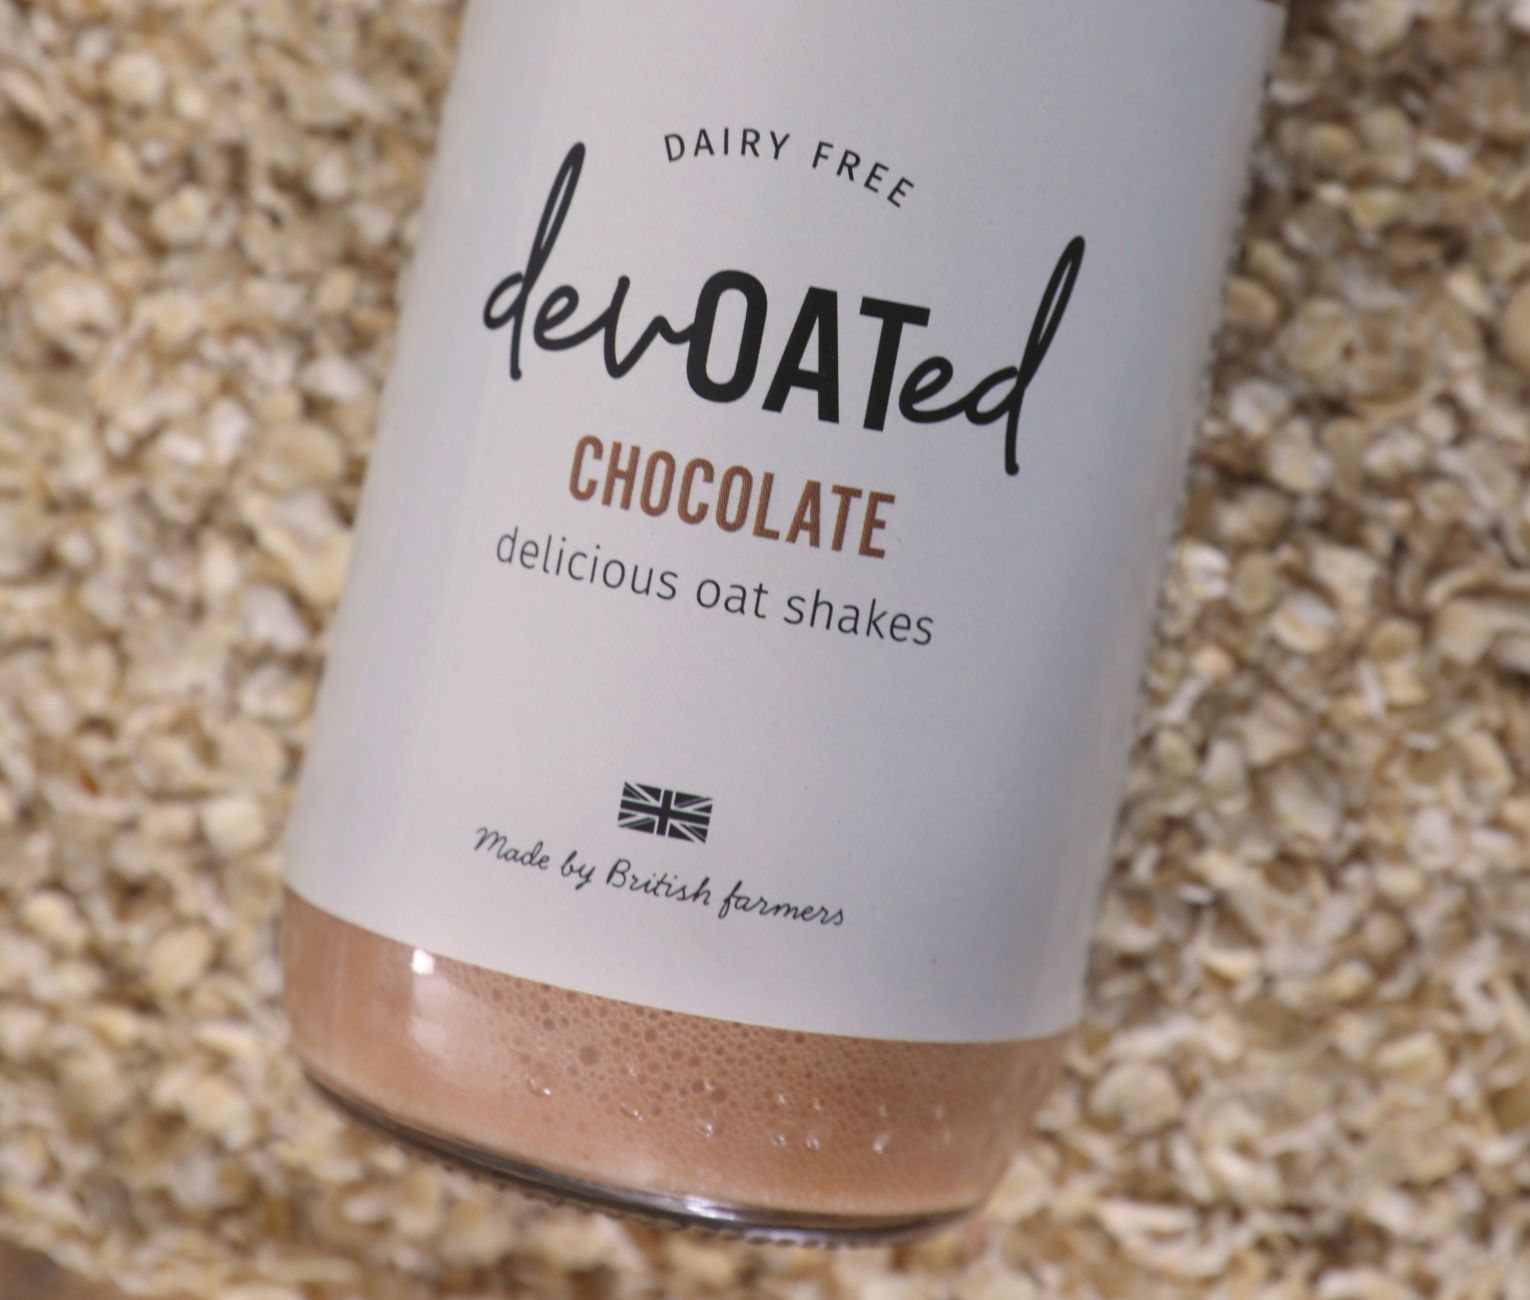 Devoated chocolate shake